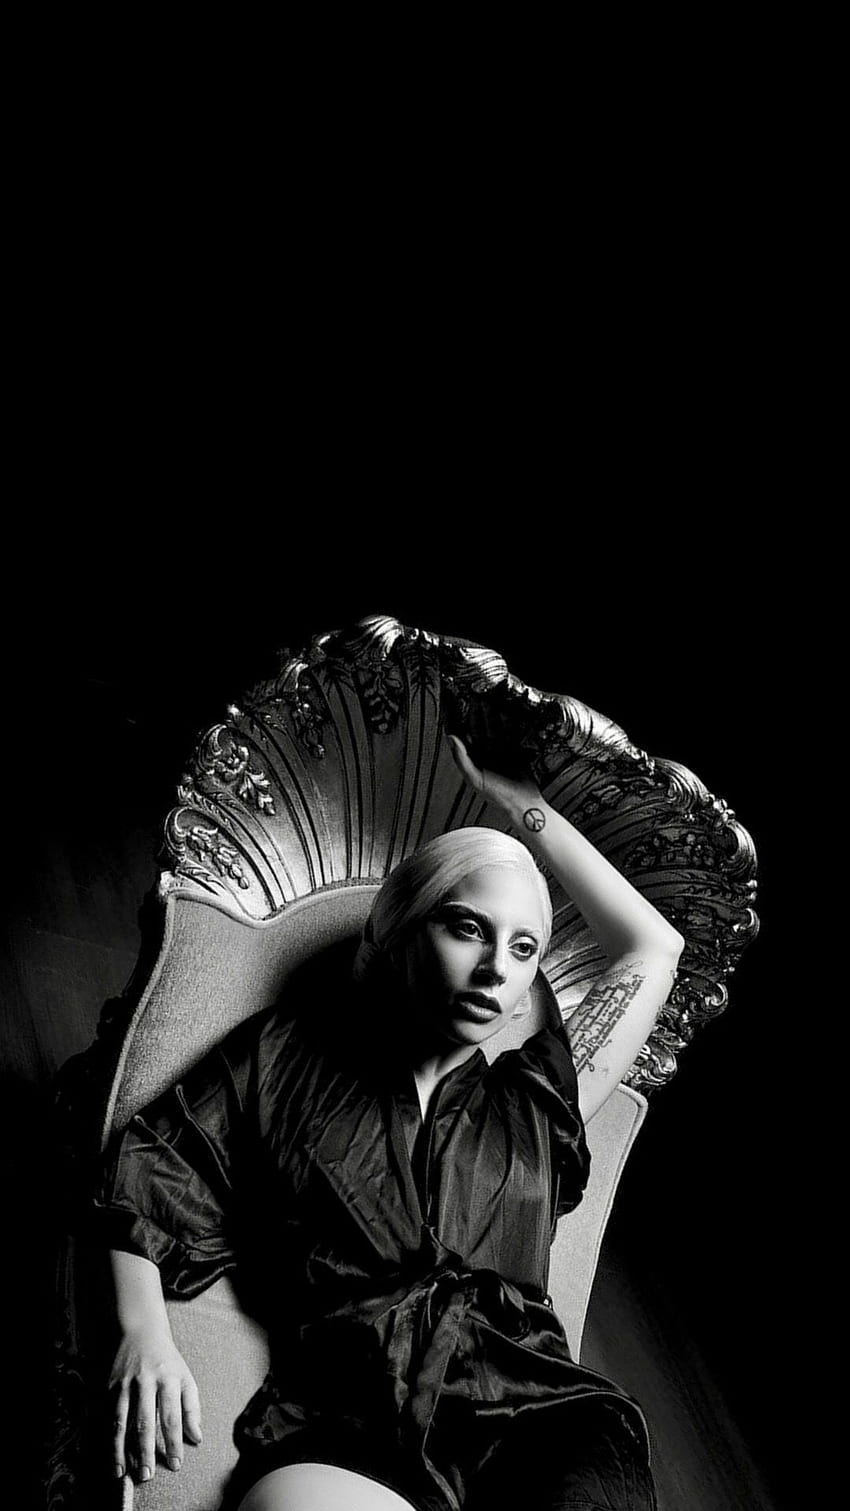 Wallpaper ID 418790  Music Lady Gaga Phone Wallpaper  1080x1920 free  download